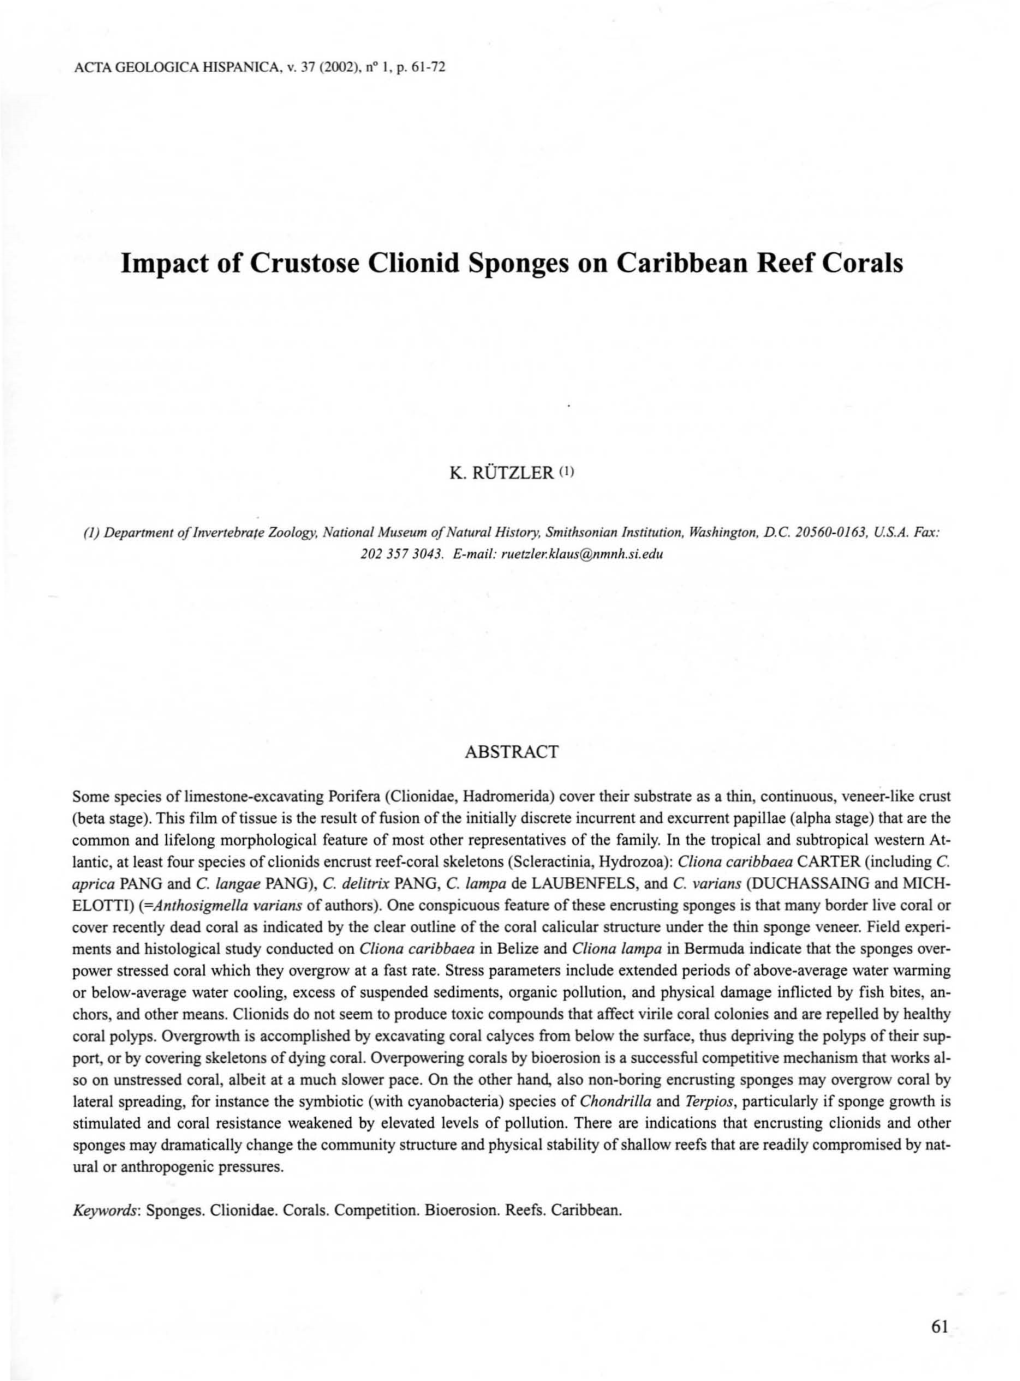 Impact of Crustose Clionid Sponges on Caribbean Reef Corals